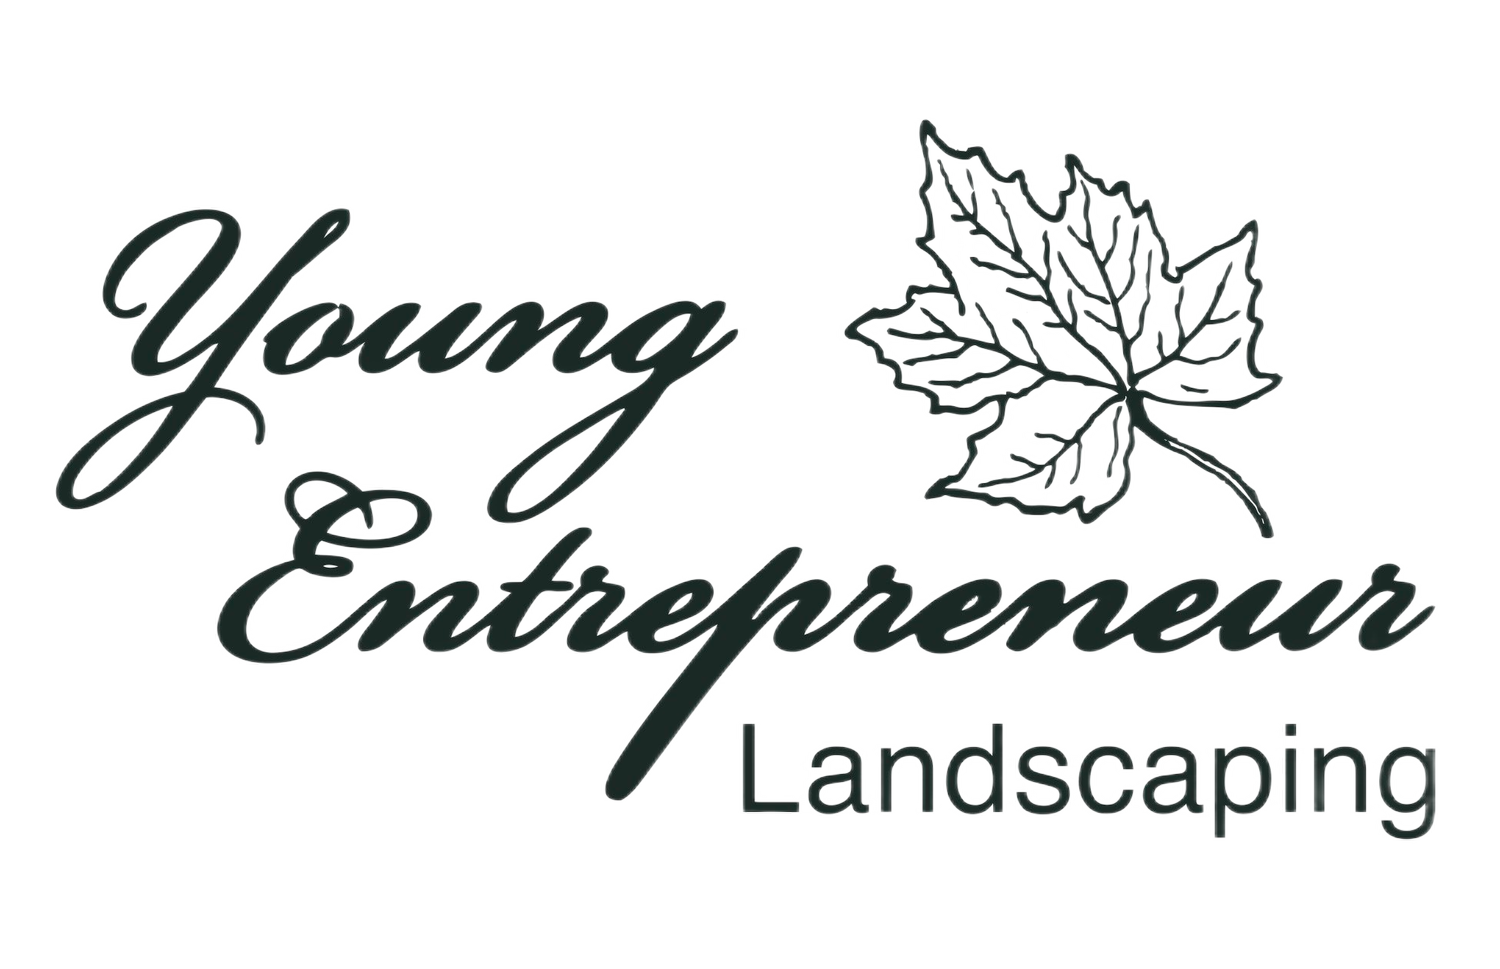 Young Entrepreneur Landscaping